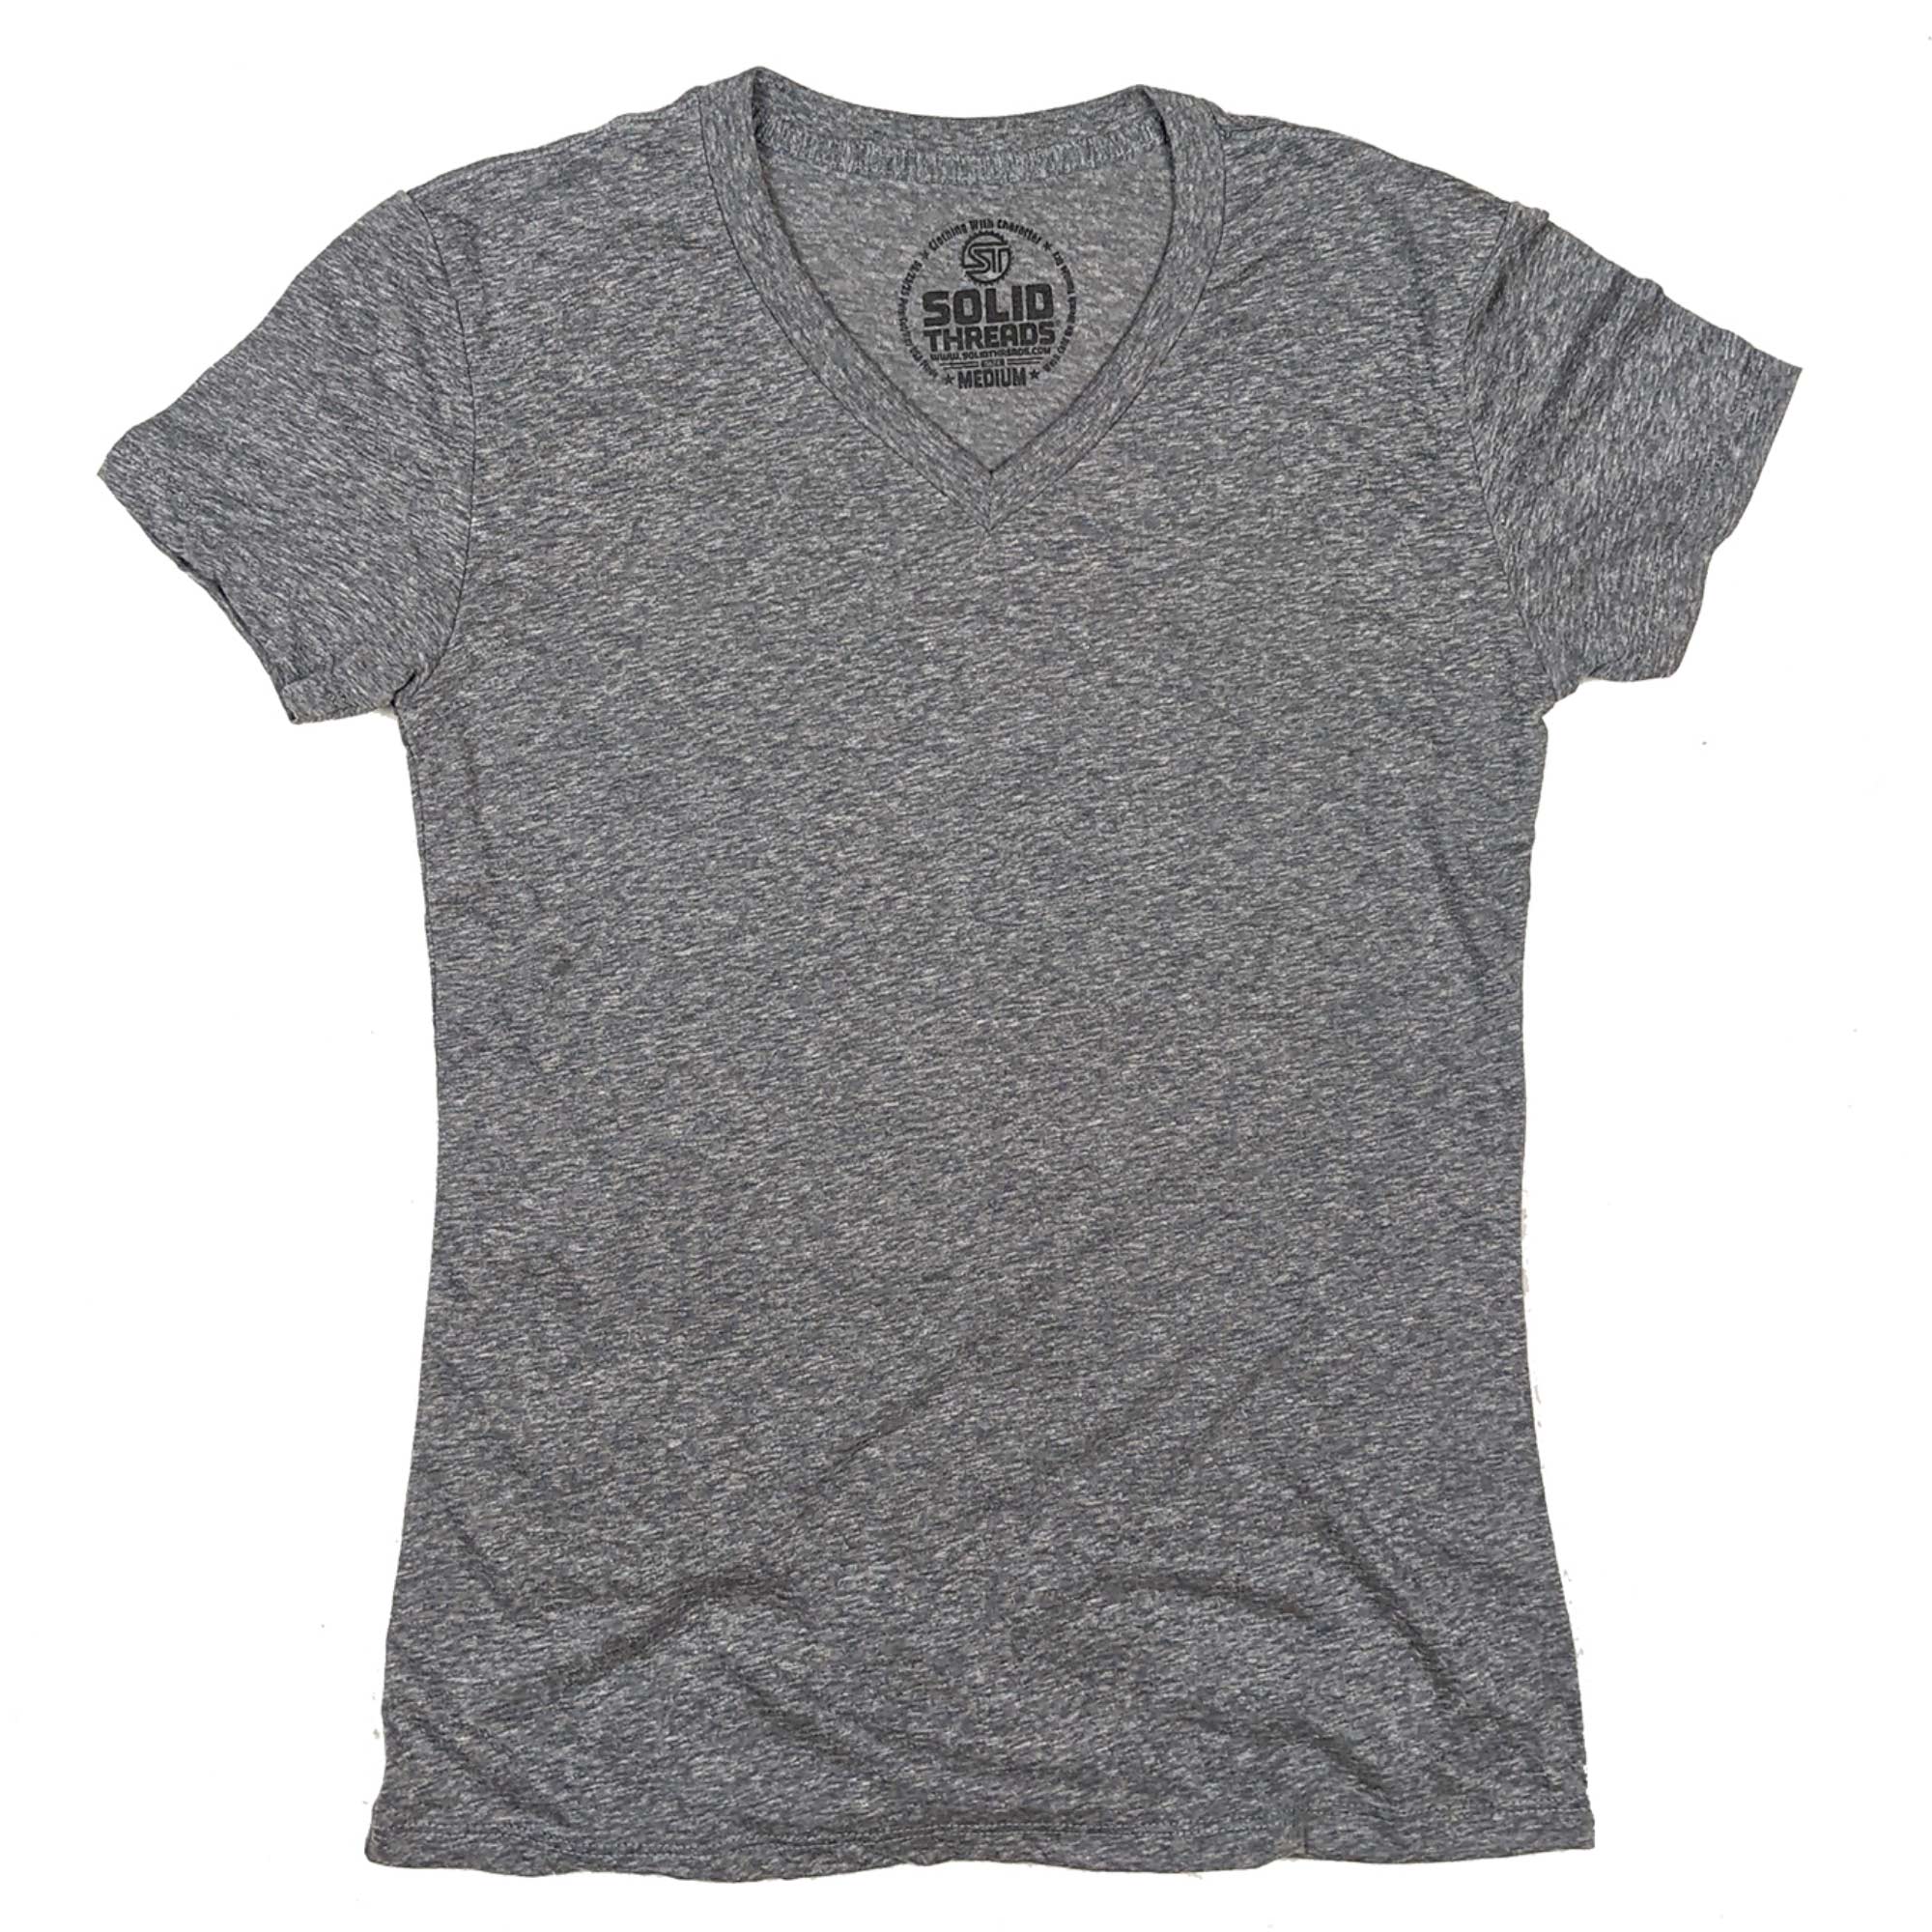 Women's Solid Threads V-Neck Triblend GreyT-shirt | Vintage Inspired USA Made Tee